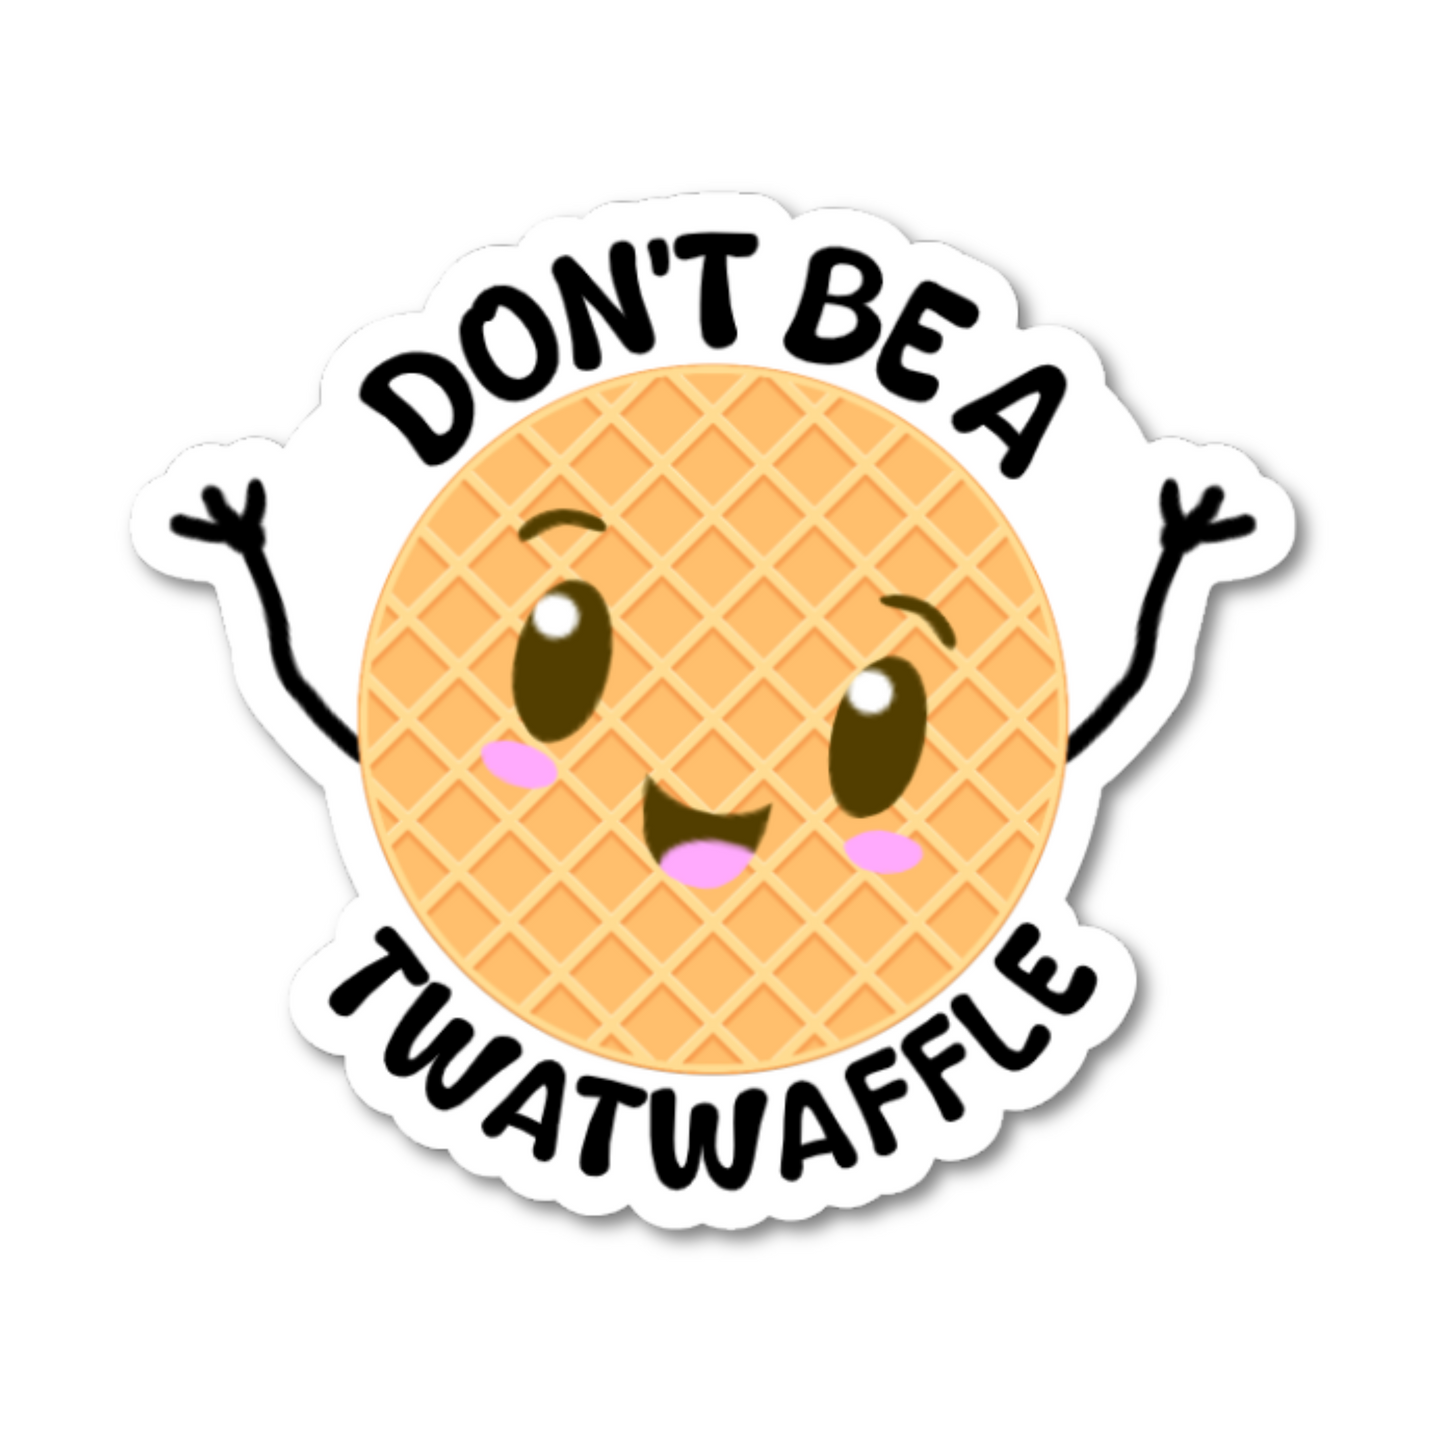 Don't Be A Twatwaffle Sticker - Funny Sticker